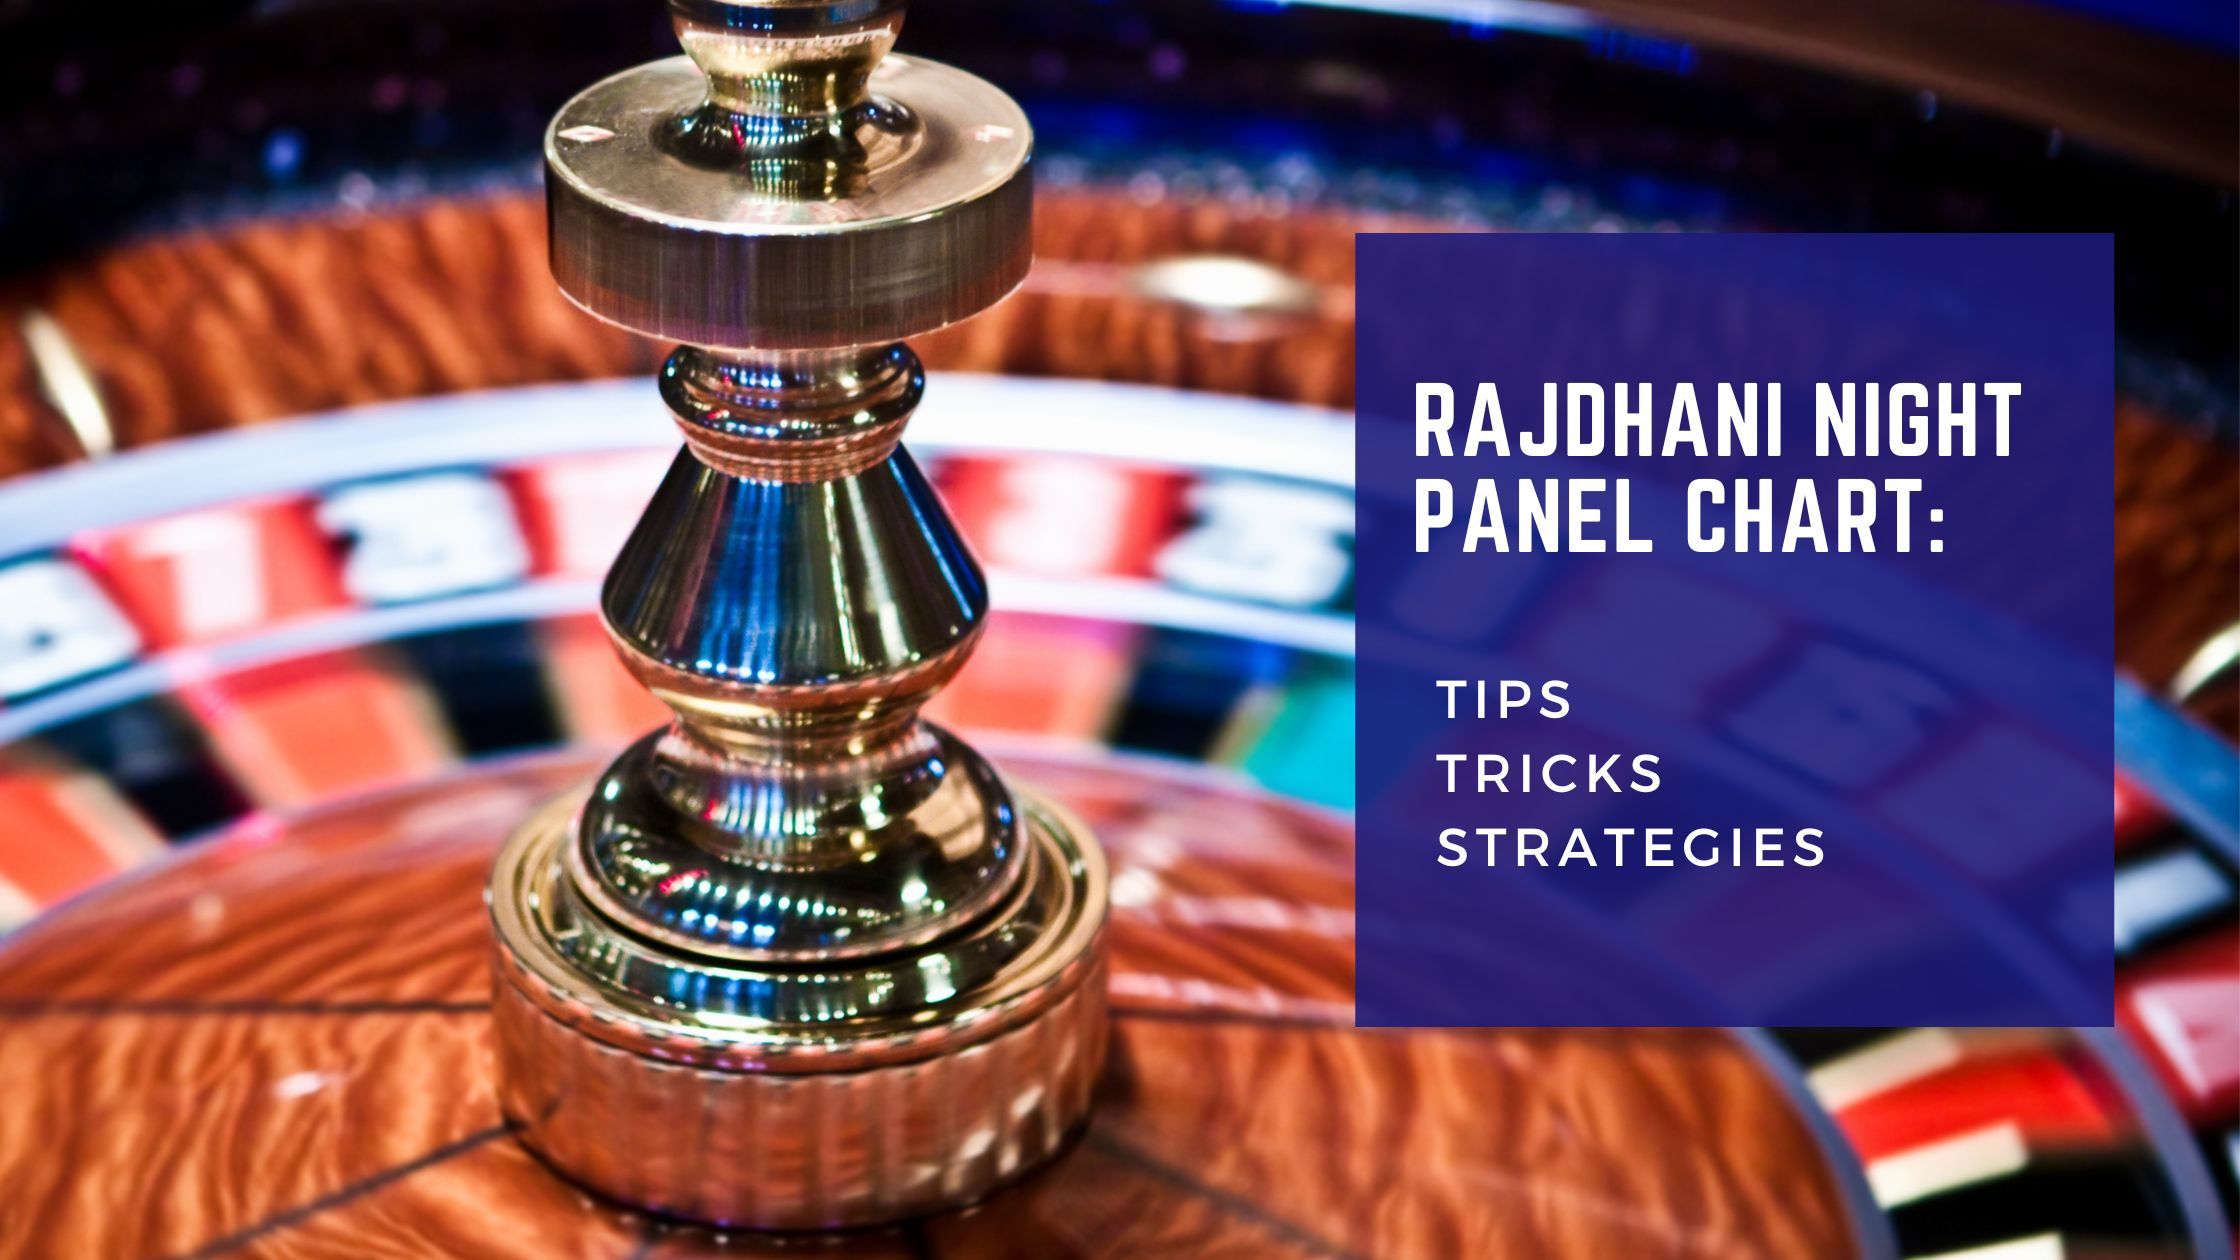 Rajdhani Night Panel Chart: Tips, Tricks, and Strategies